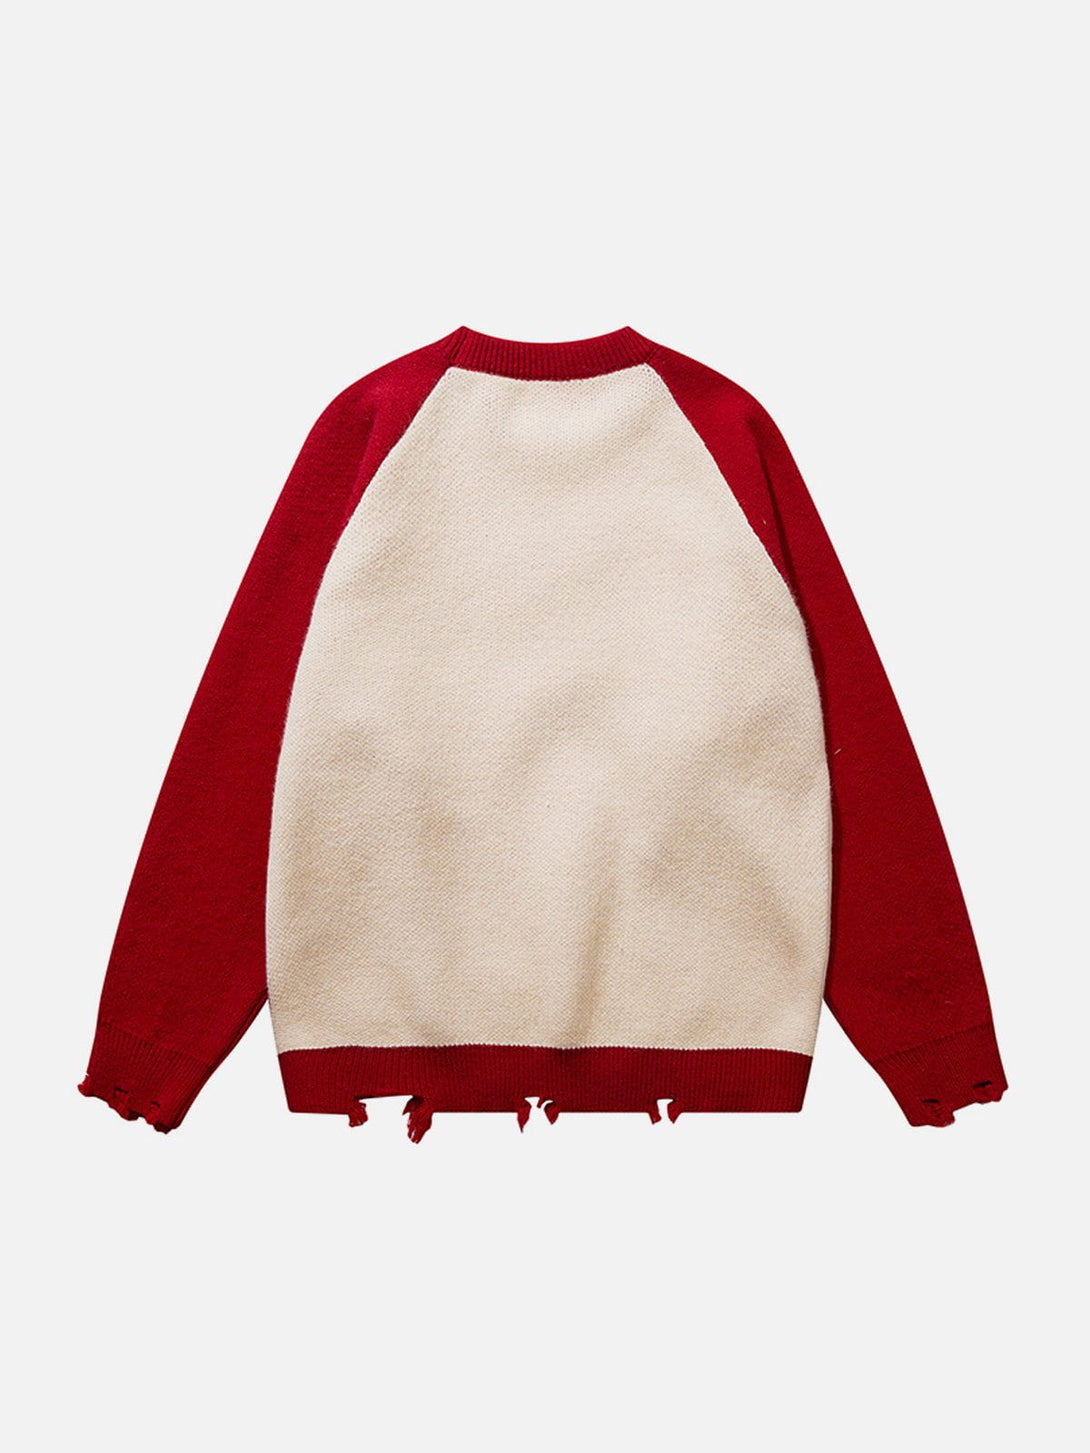 Levefly - Cartoon Rabbit Embroidery Sweater - Streetwear Fashion - levefly.com